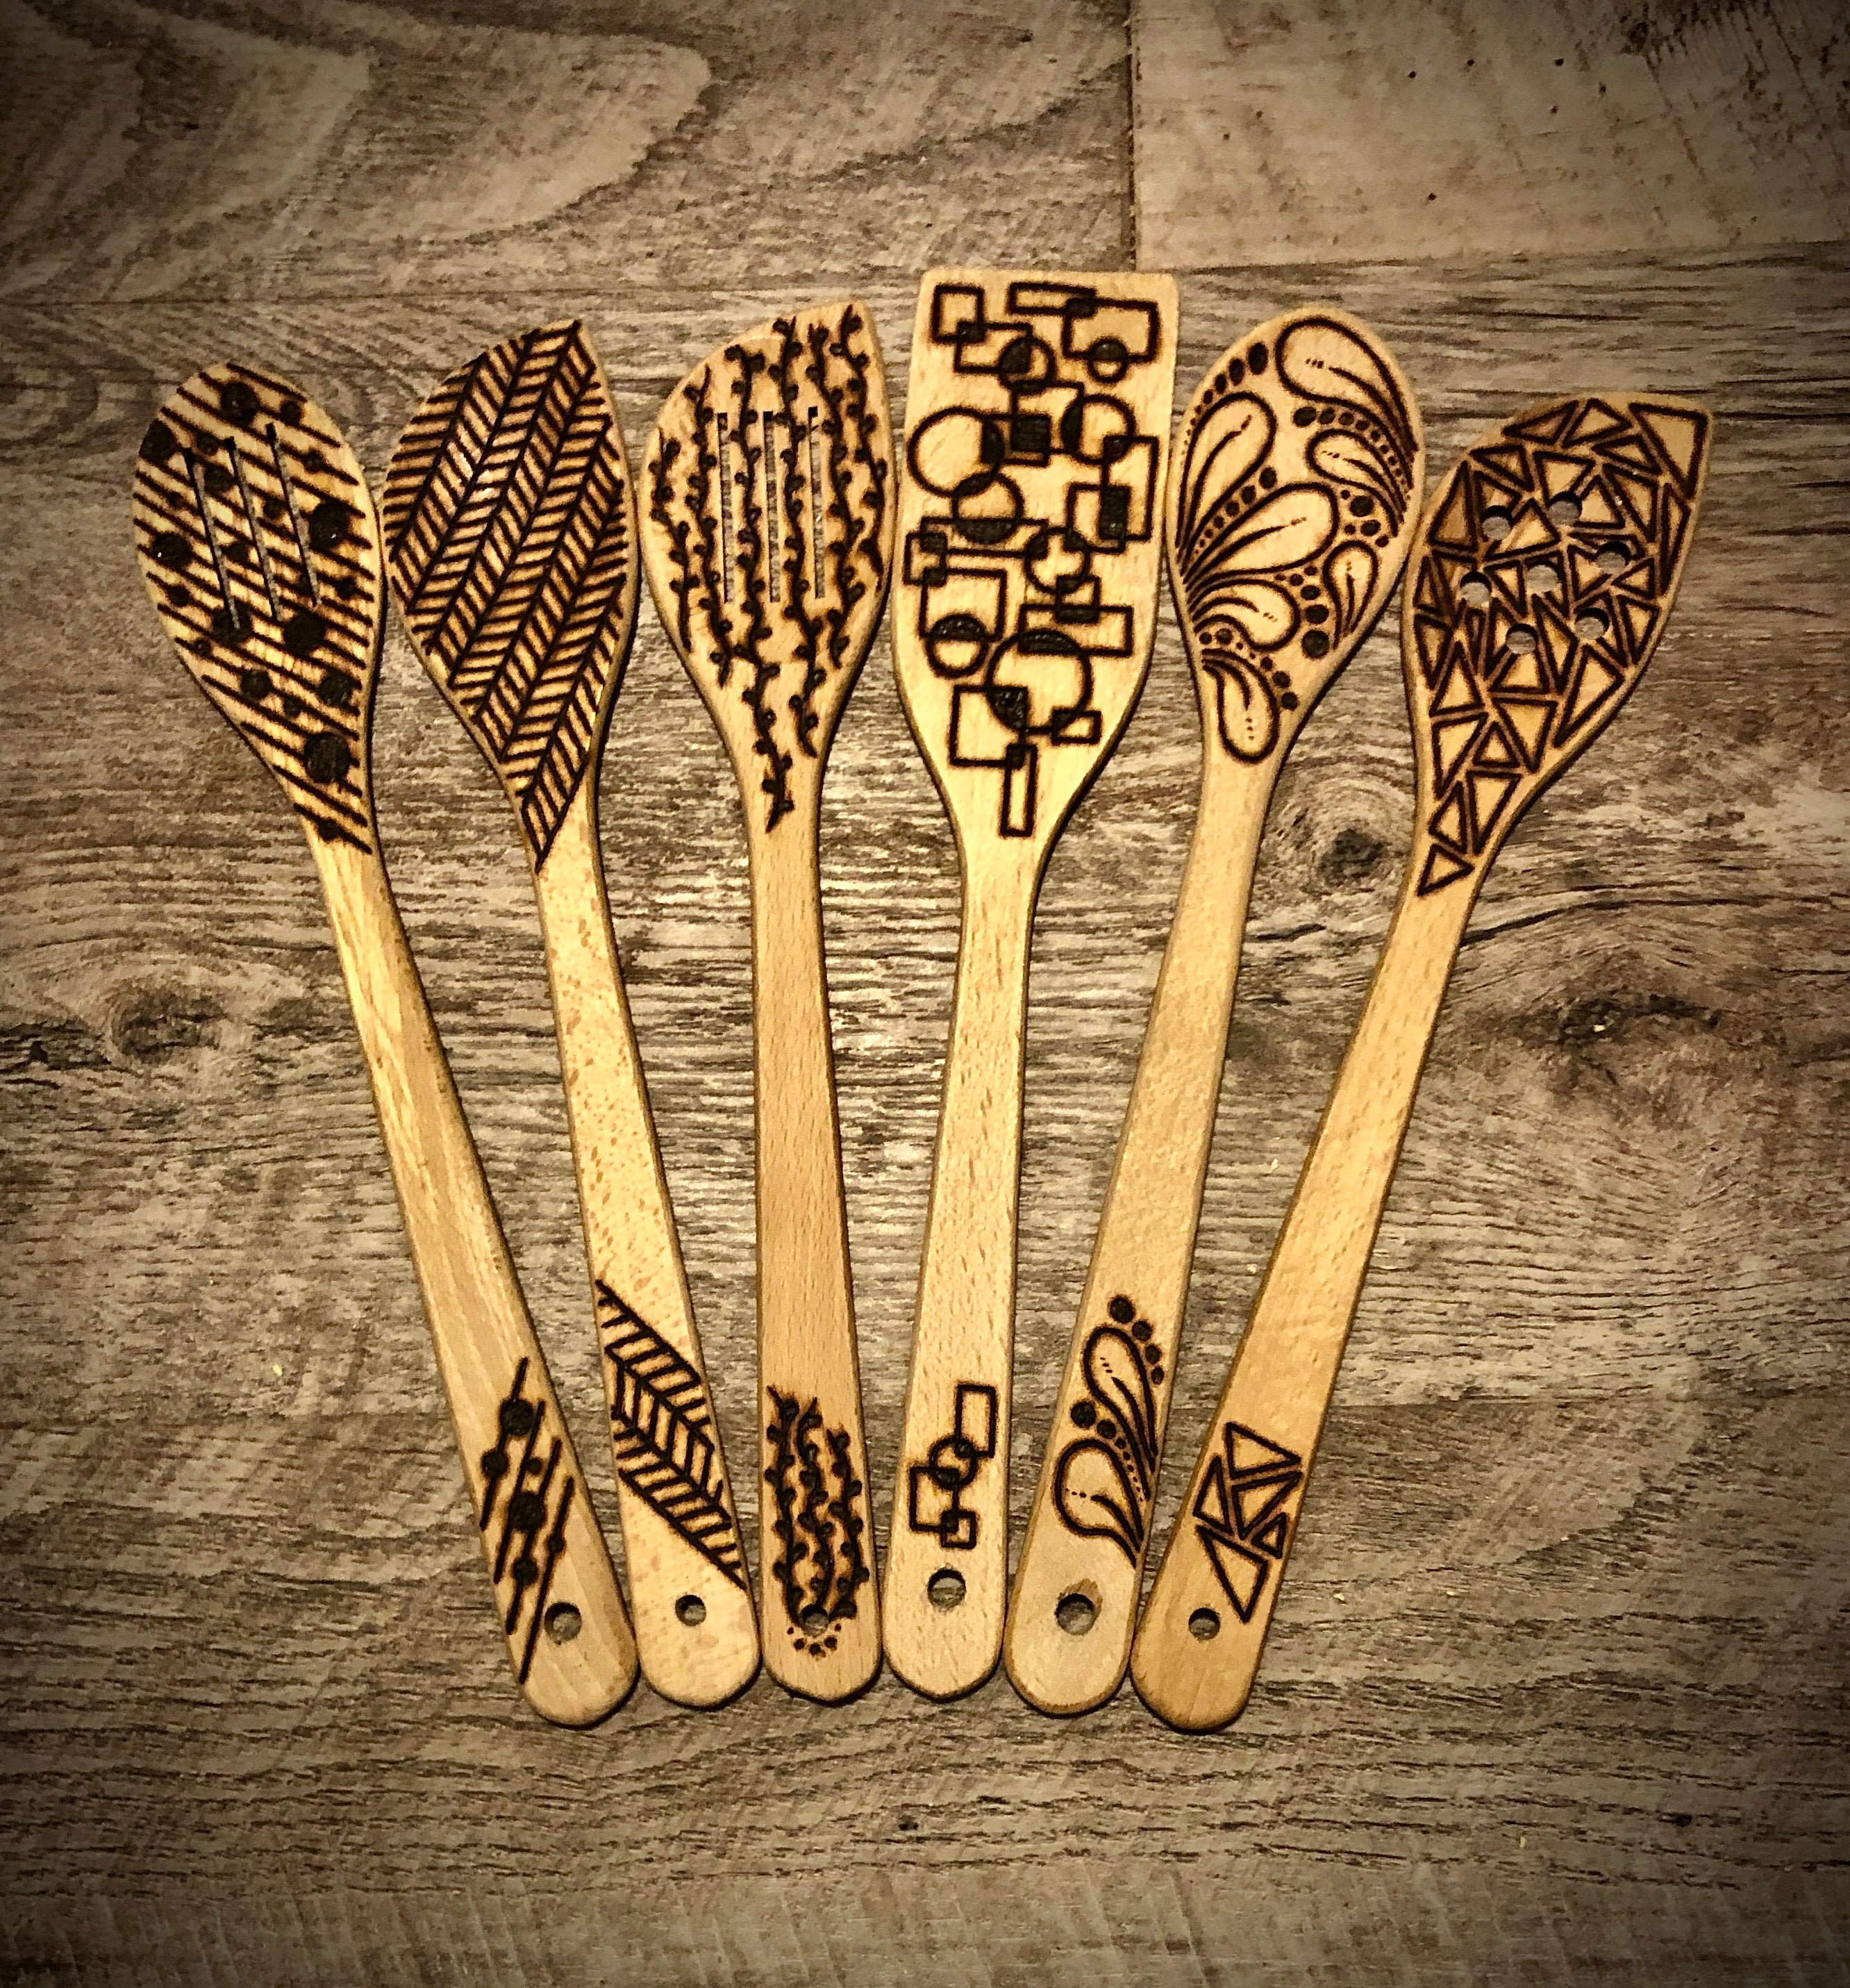 Star Wars Wooden Spoons Set Of 5starwars Burned Kitchen Utensils Setbamboo  Cooki